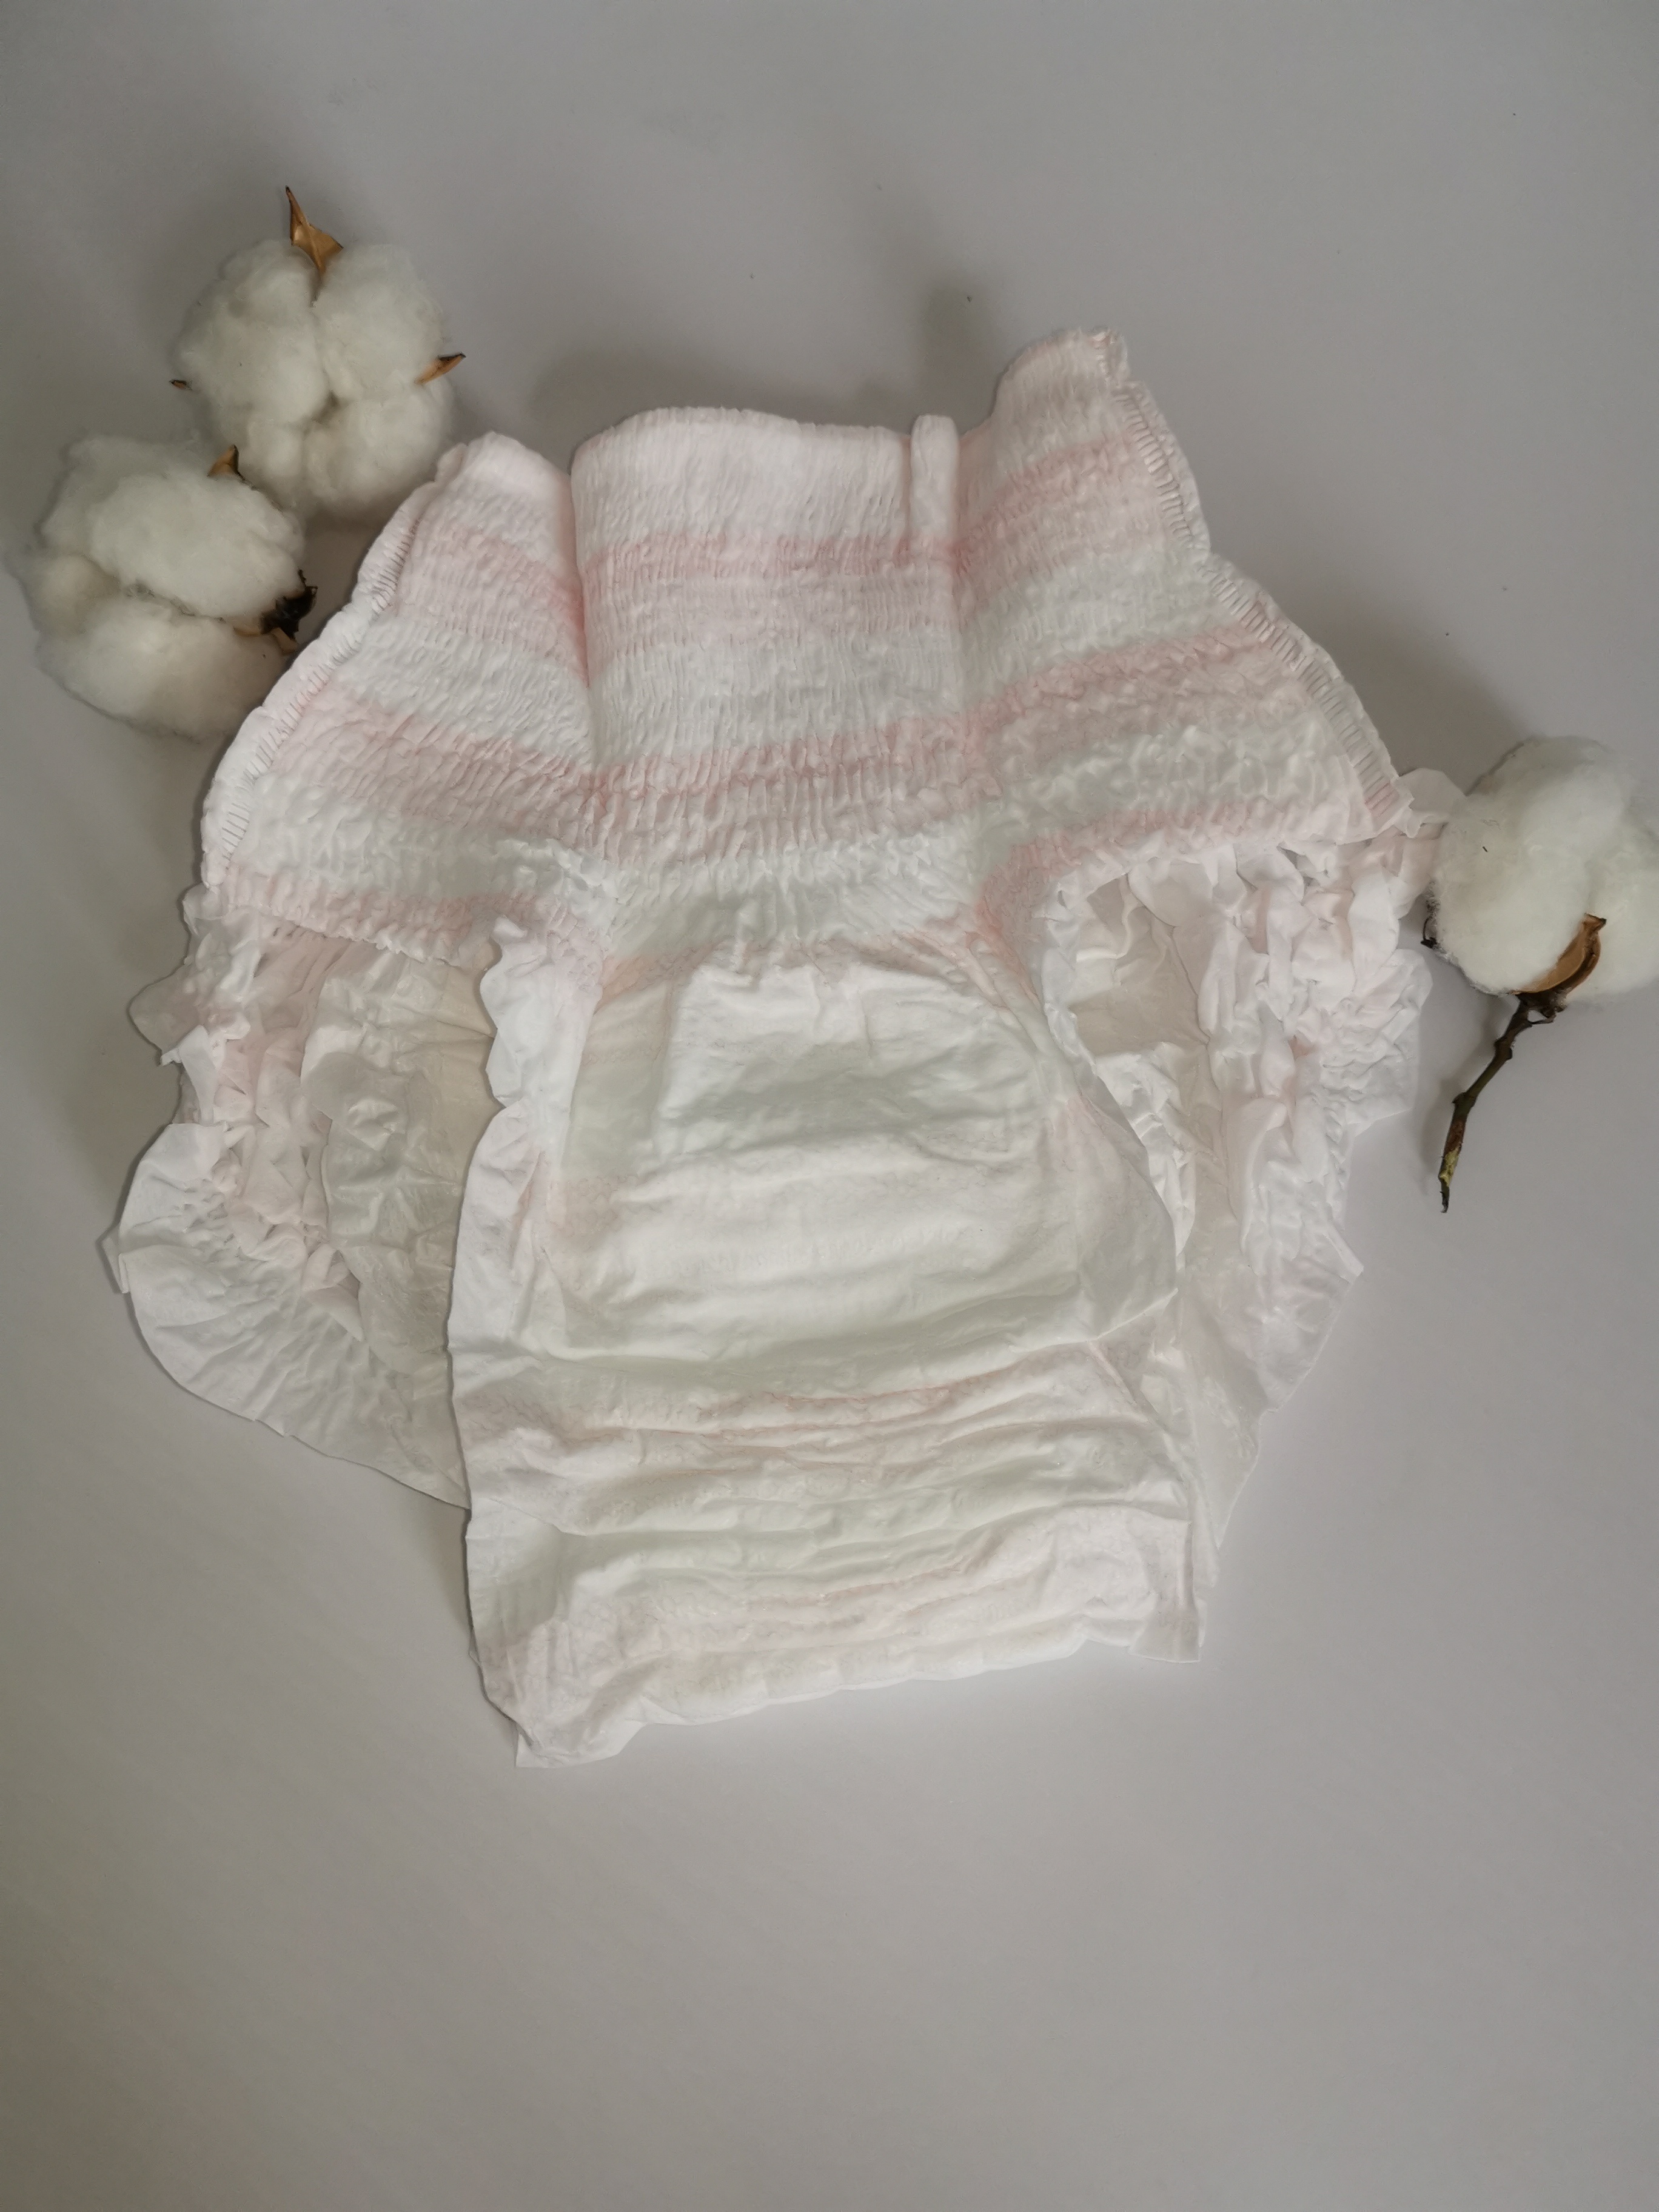 Wholesale New design female period pants disposable underwear women menstrual sanitary napkin